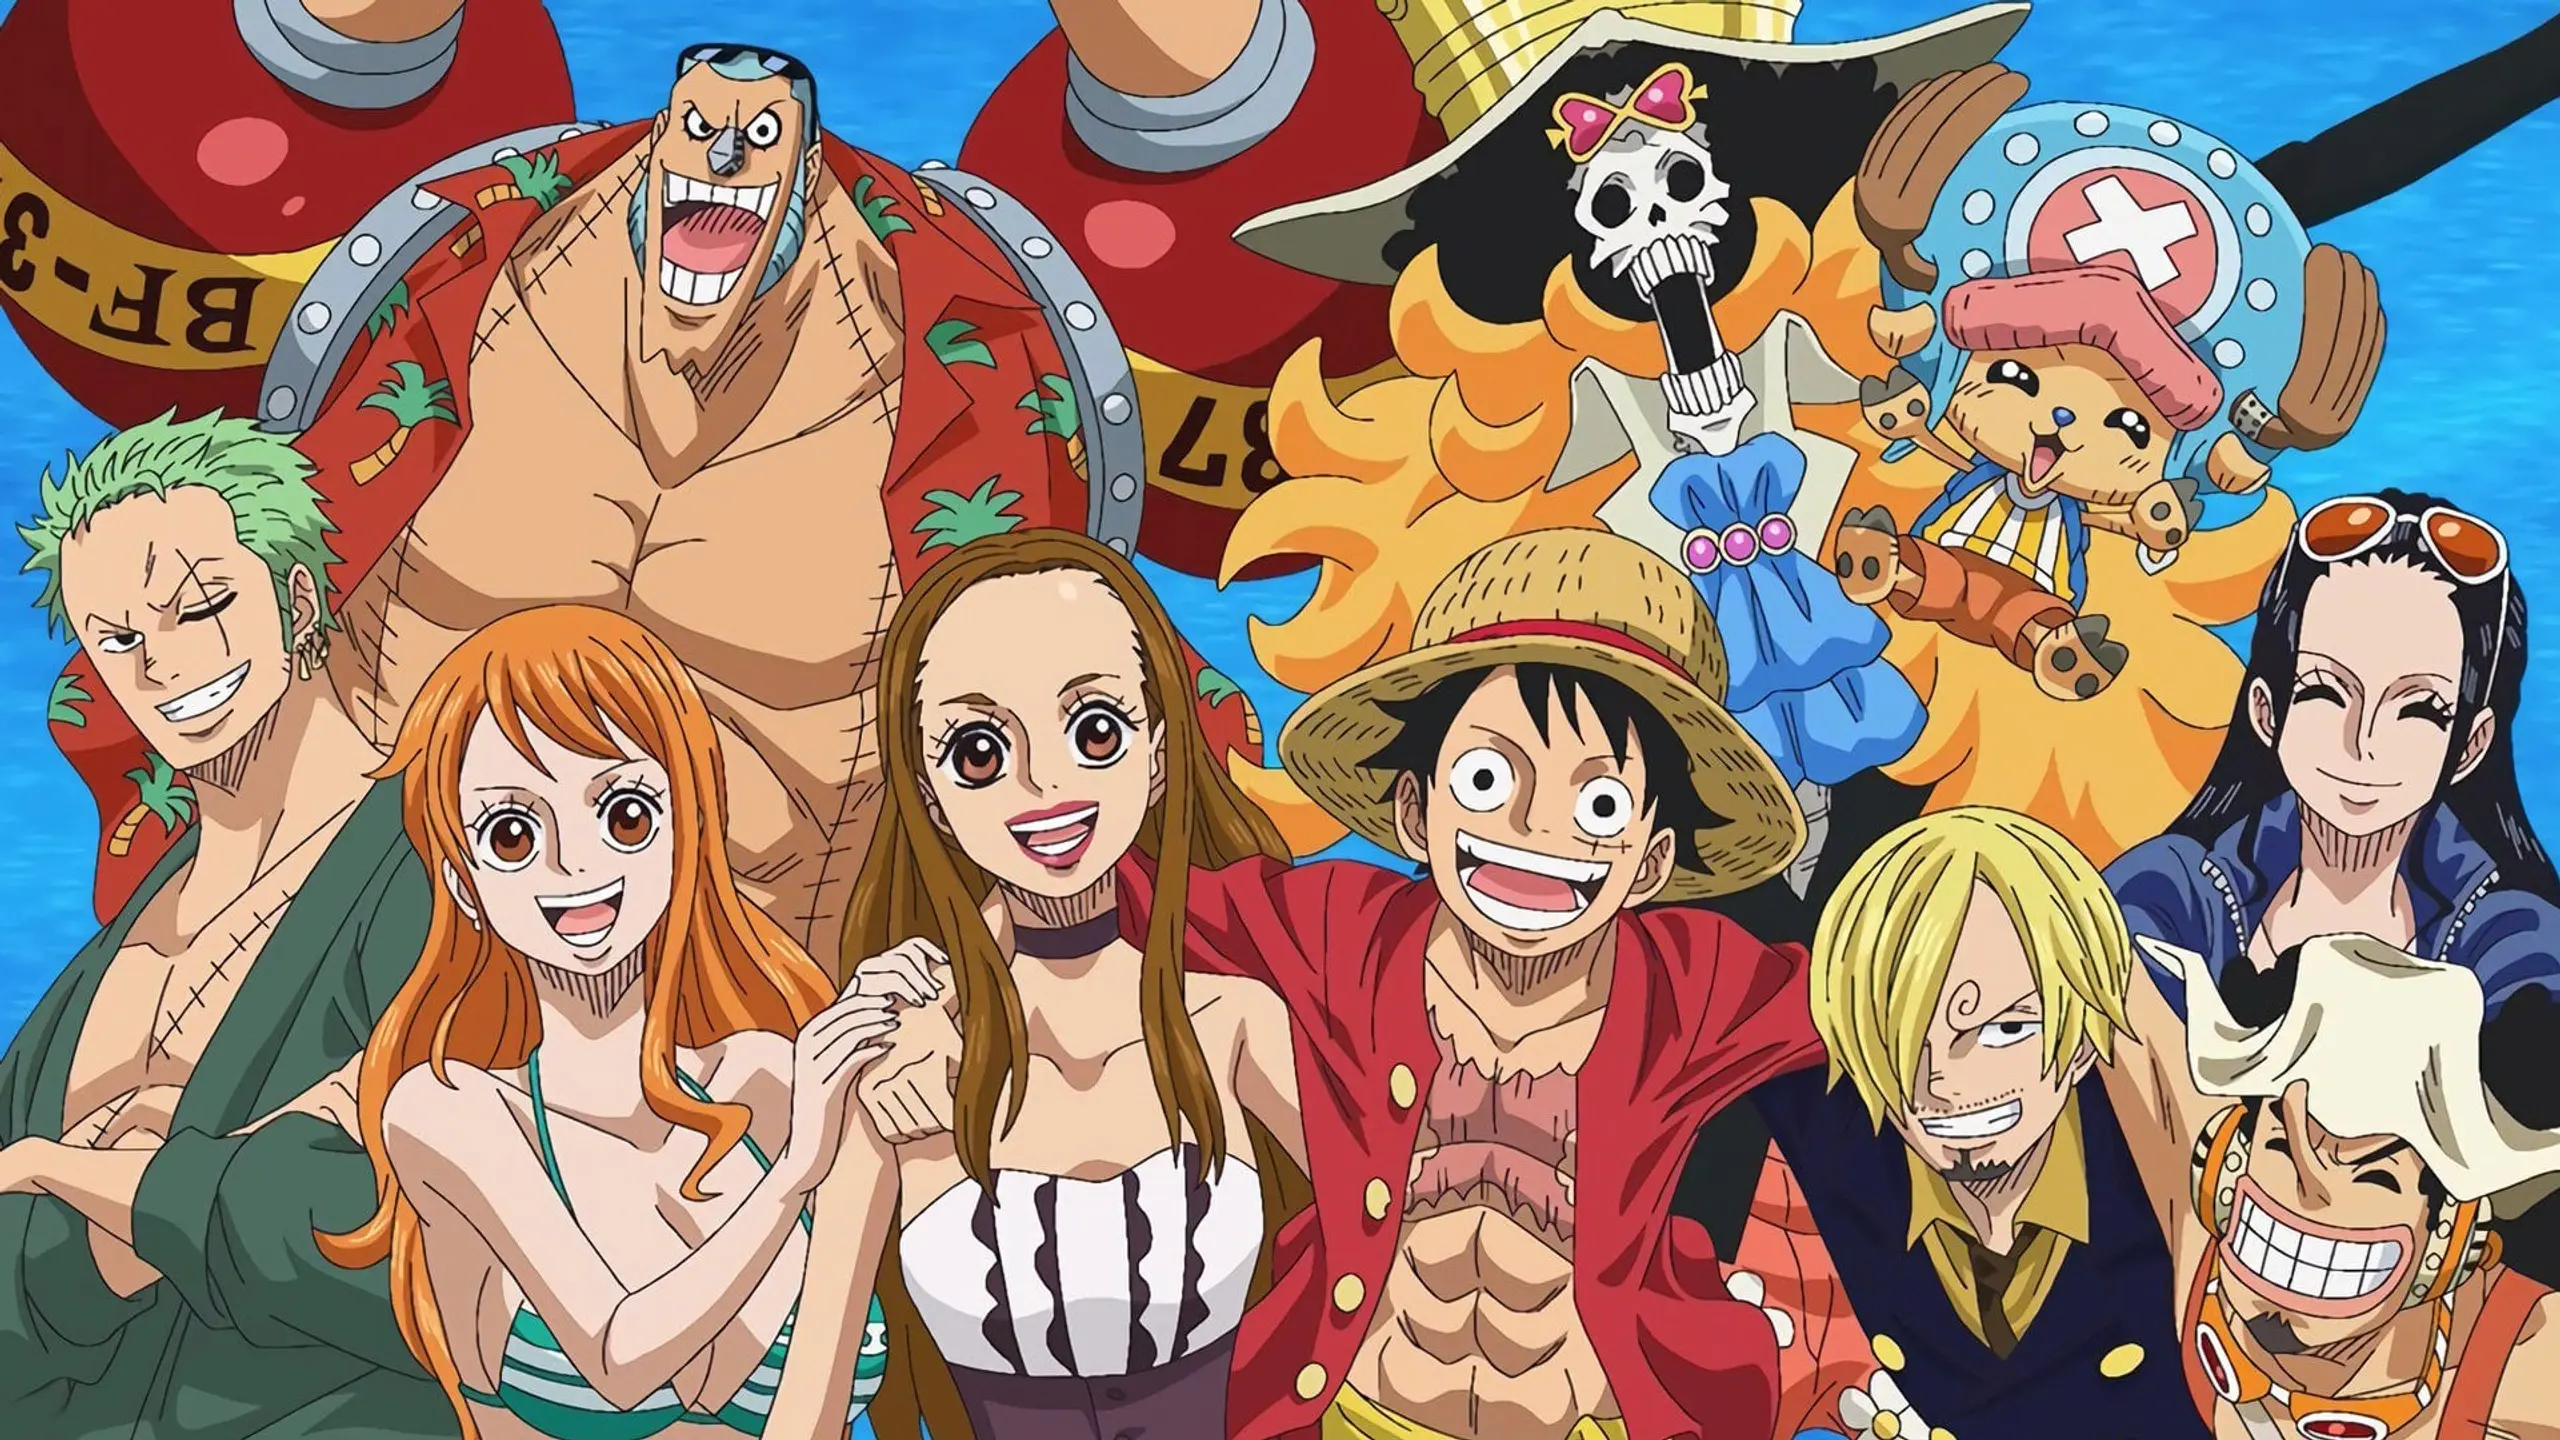 One Piece Special: Abenteuer auf Nebulandia